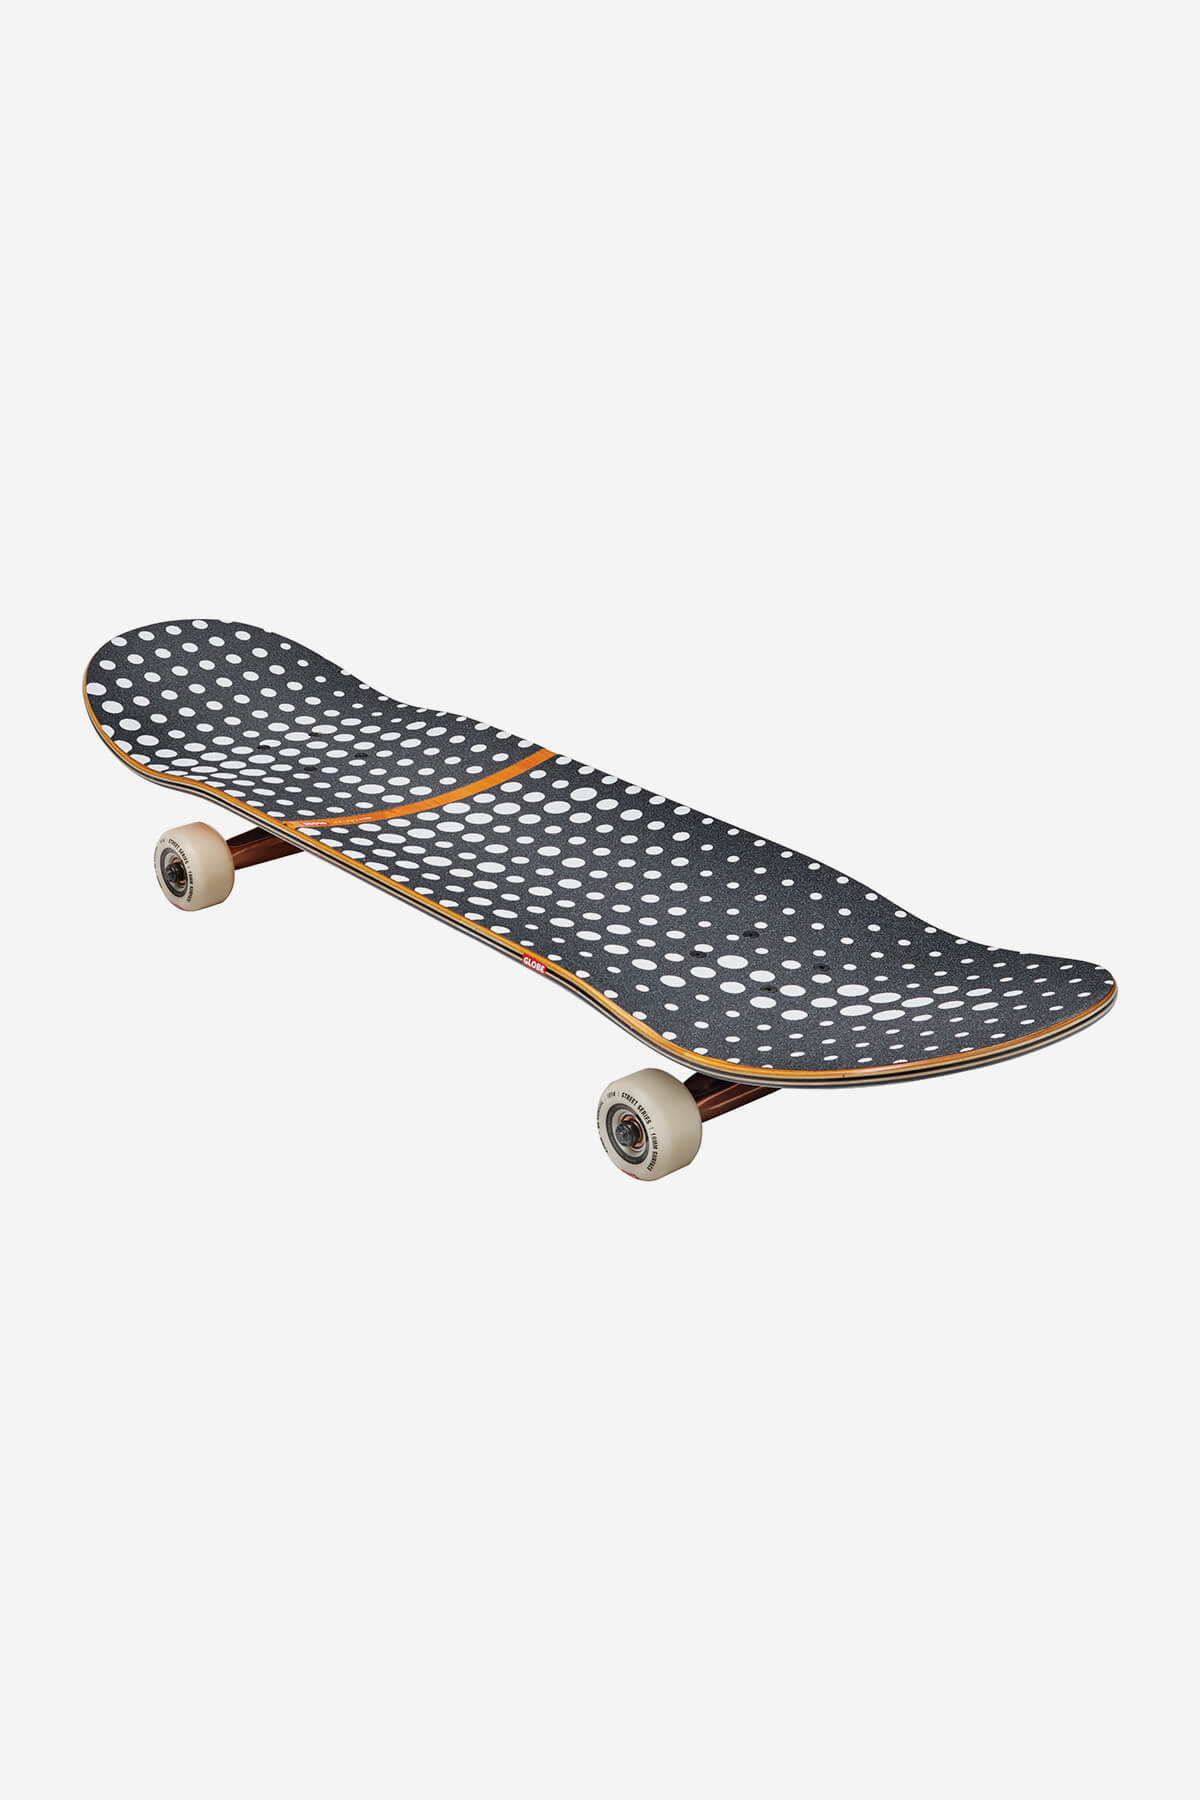 Globe - G2 Dot Gain - Peace - 8,5" completo Skateboard